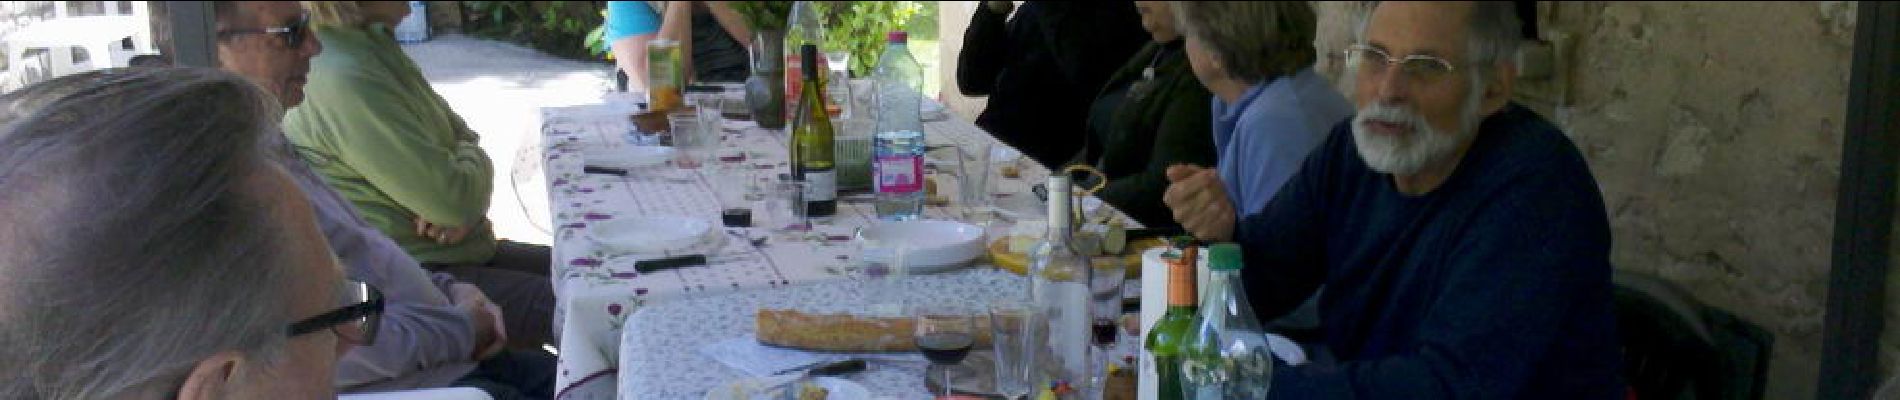 POI Champagne-sur-Seine - 04 - A table - Photo